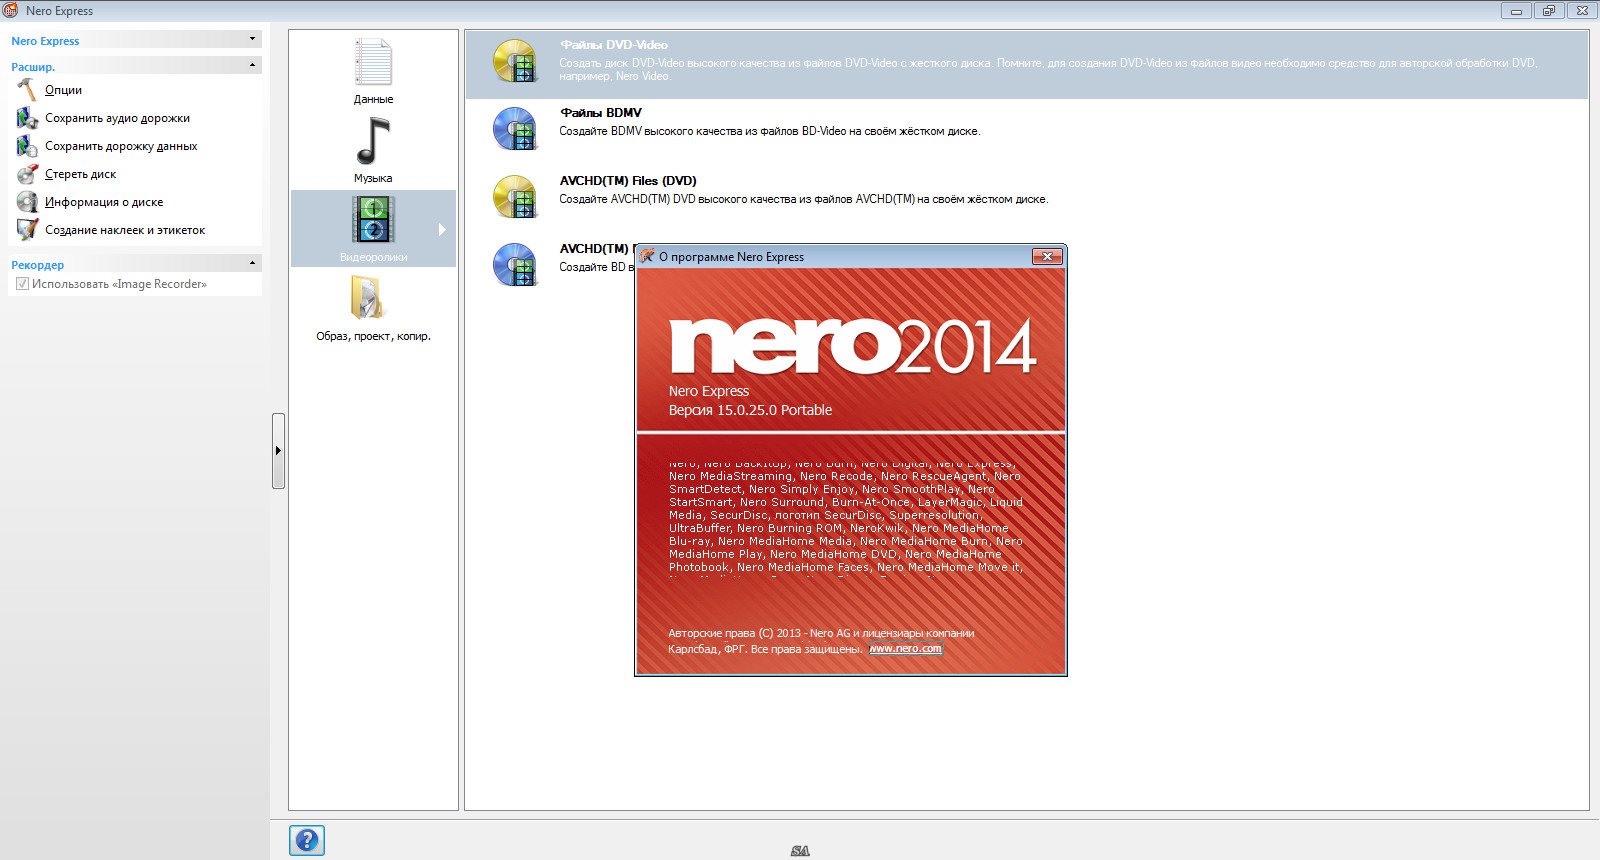 Nero 10 como usar utorrent serlostuber omg torrent